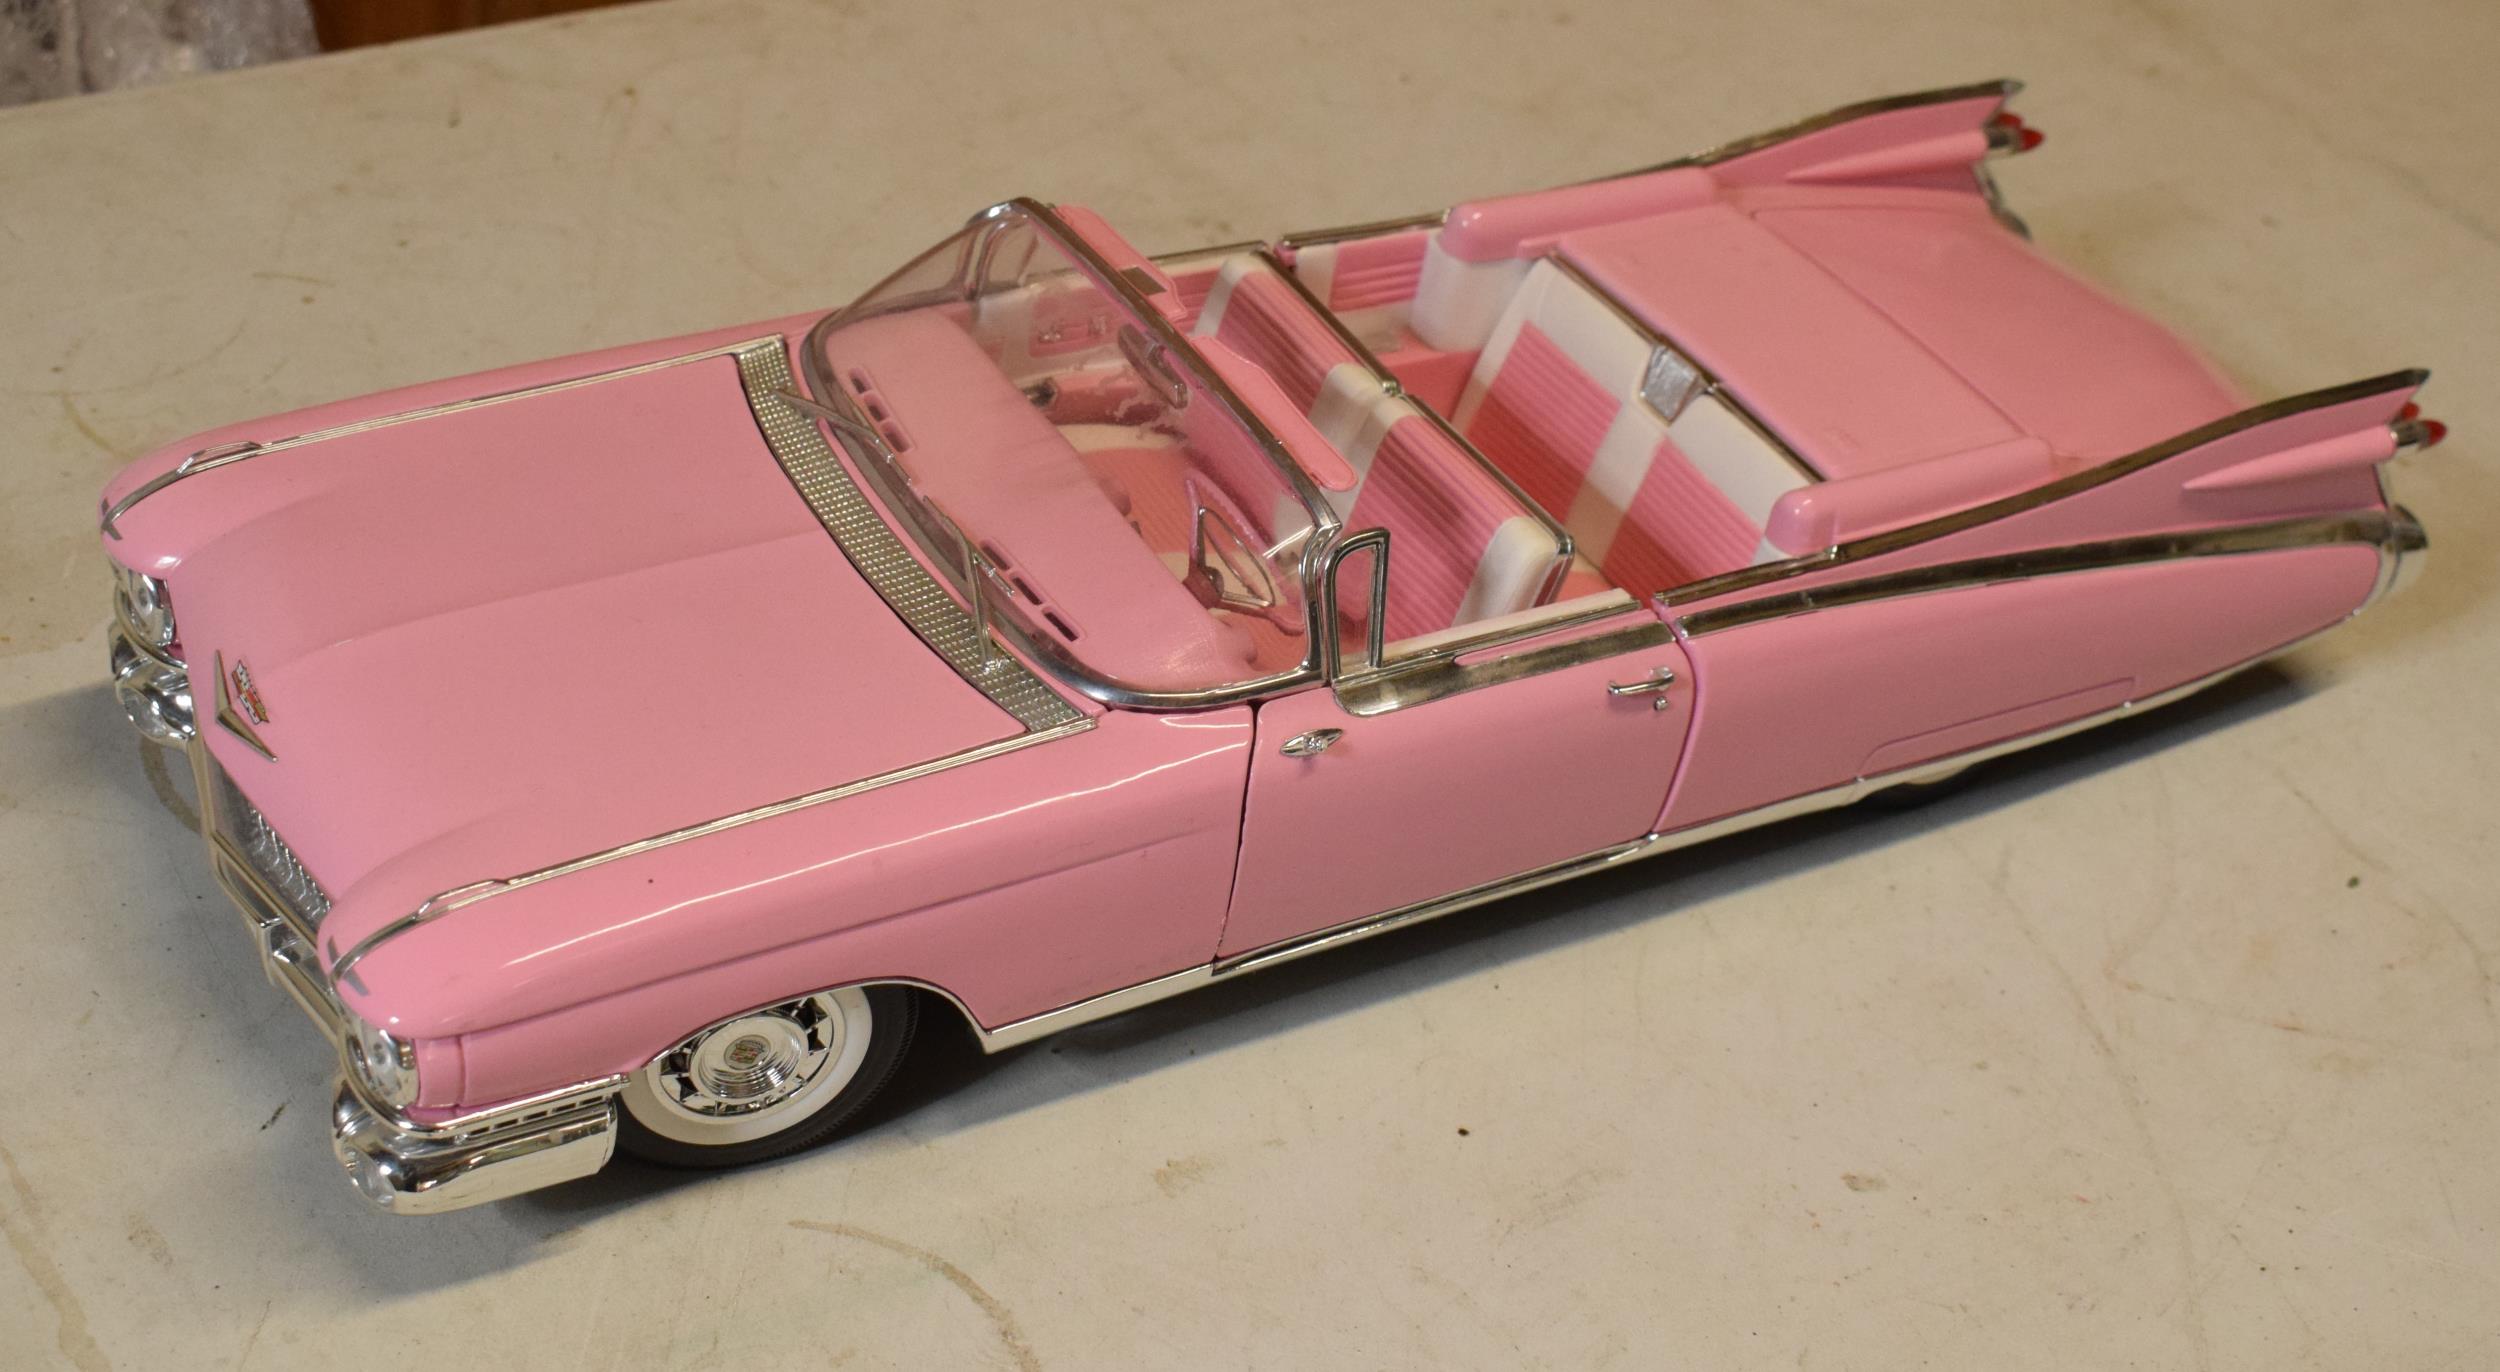 Maisto 1:12 scale Cadillac Eldorado Biarritz 1959 model in pink.